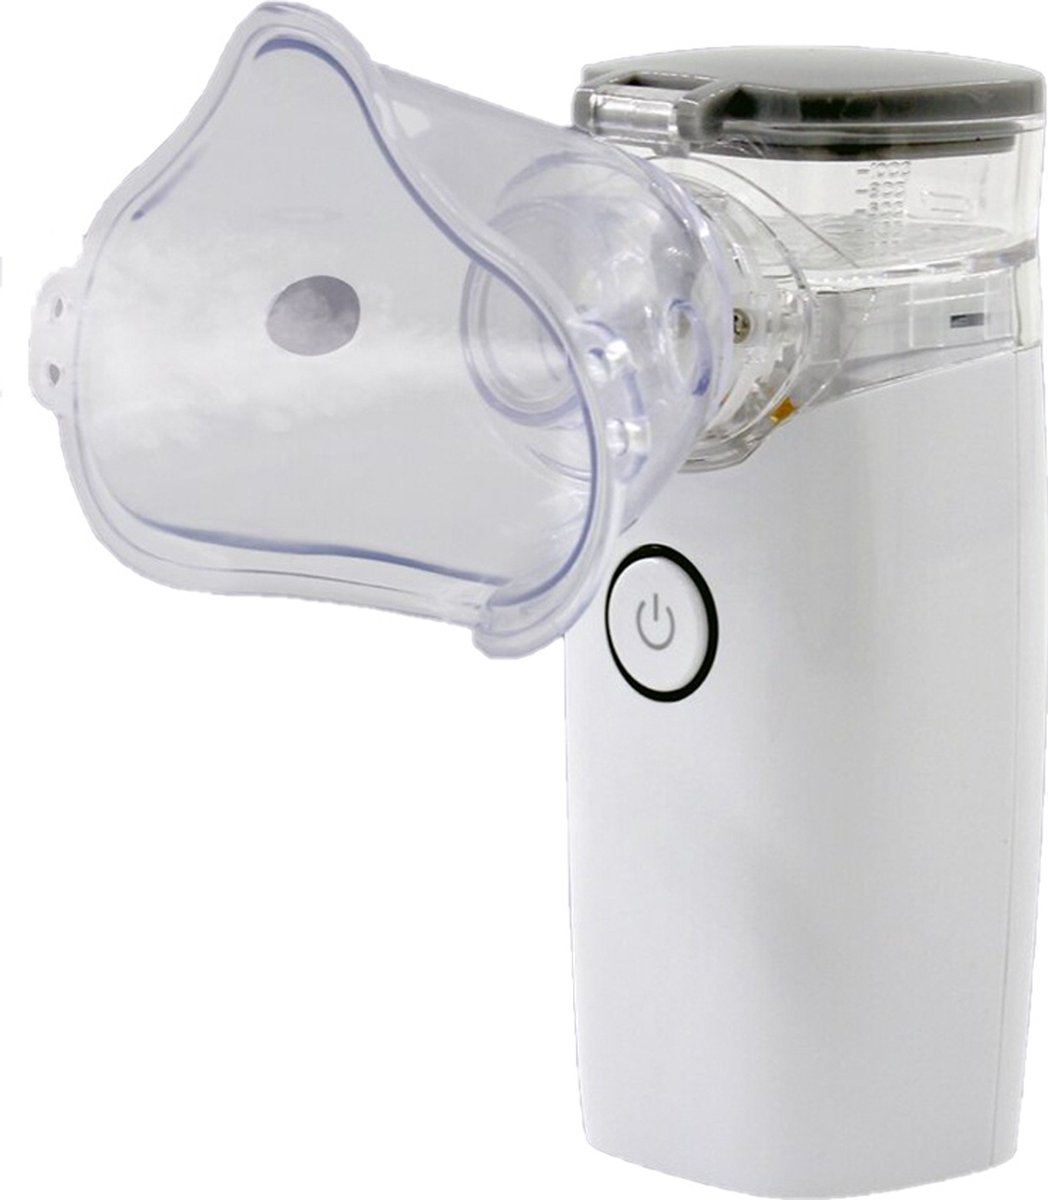 Bolture Aerosoltoestel - Ultrasone Vernevelaar Inhalator - Inhalatieapparaat voor Huisdieren - Stoom